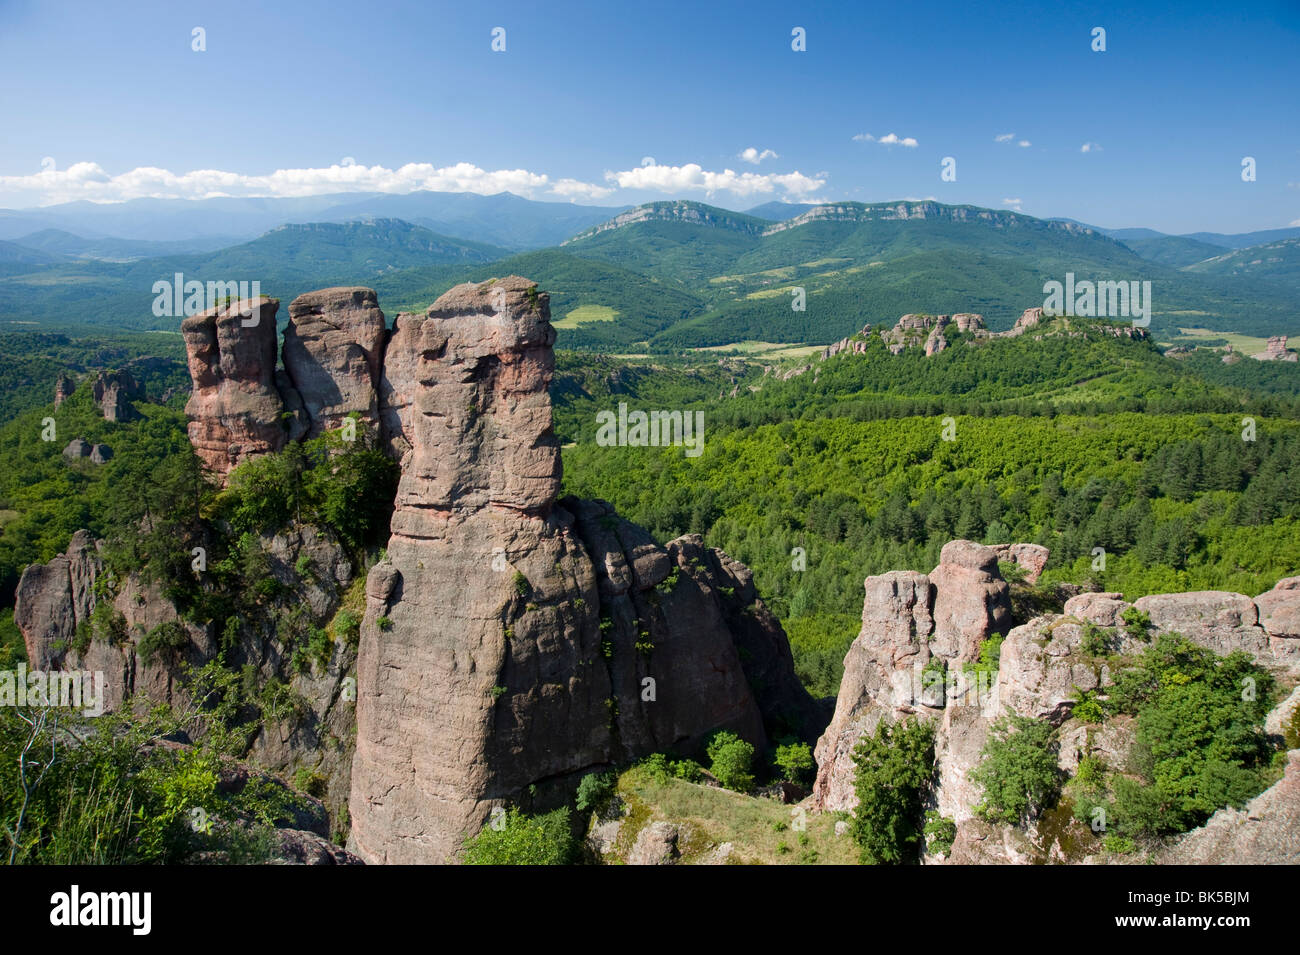 The towering sandstone pillars at Belogradchik Fortress, Bulgaria, Europe Stock Photo